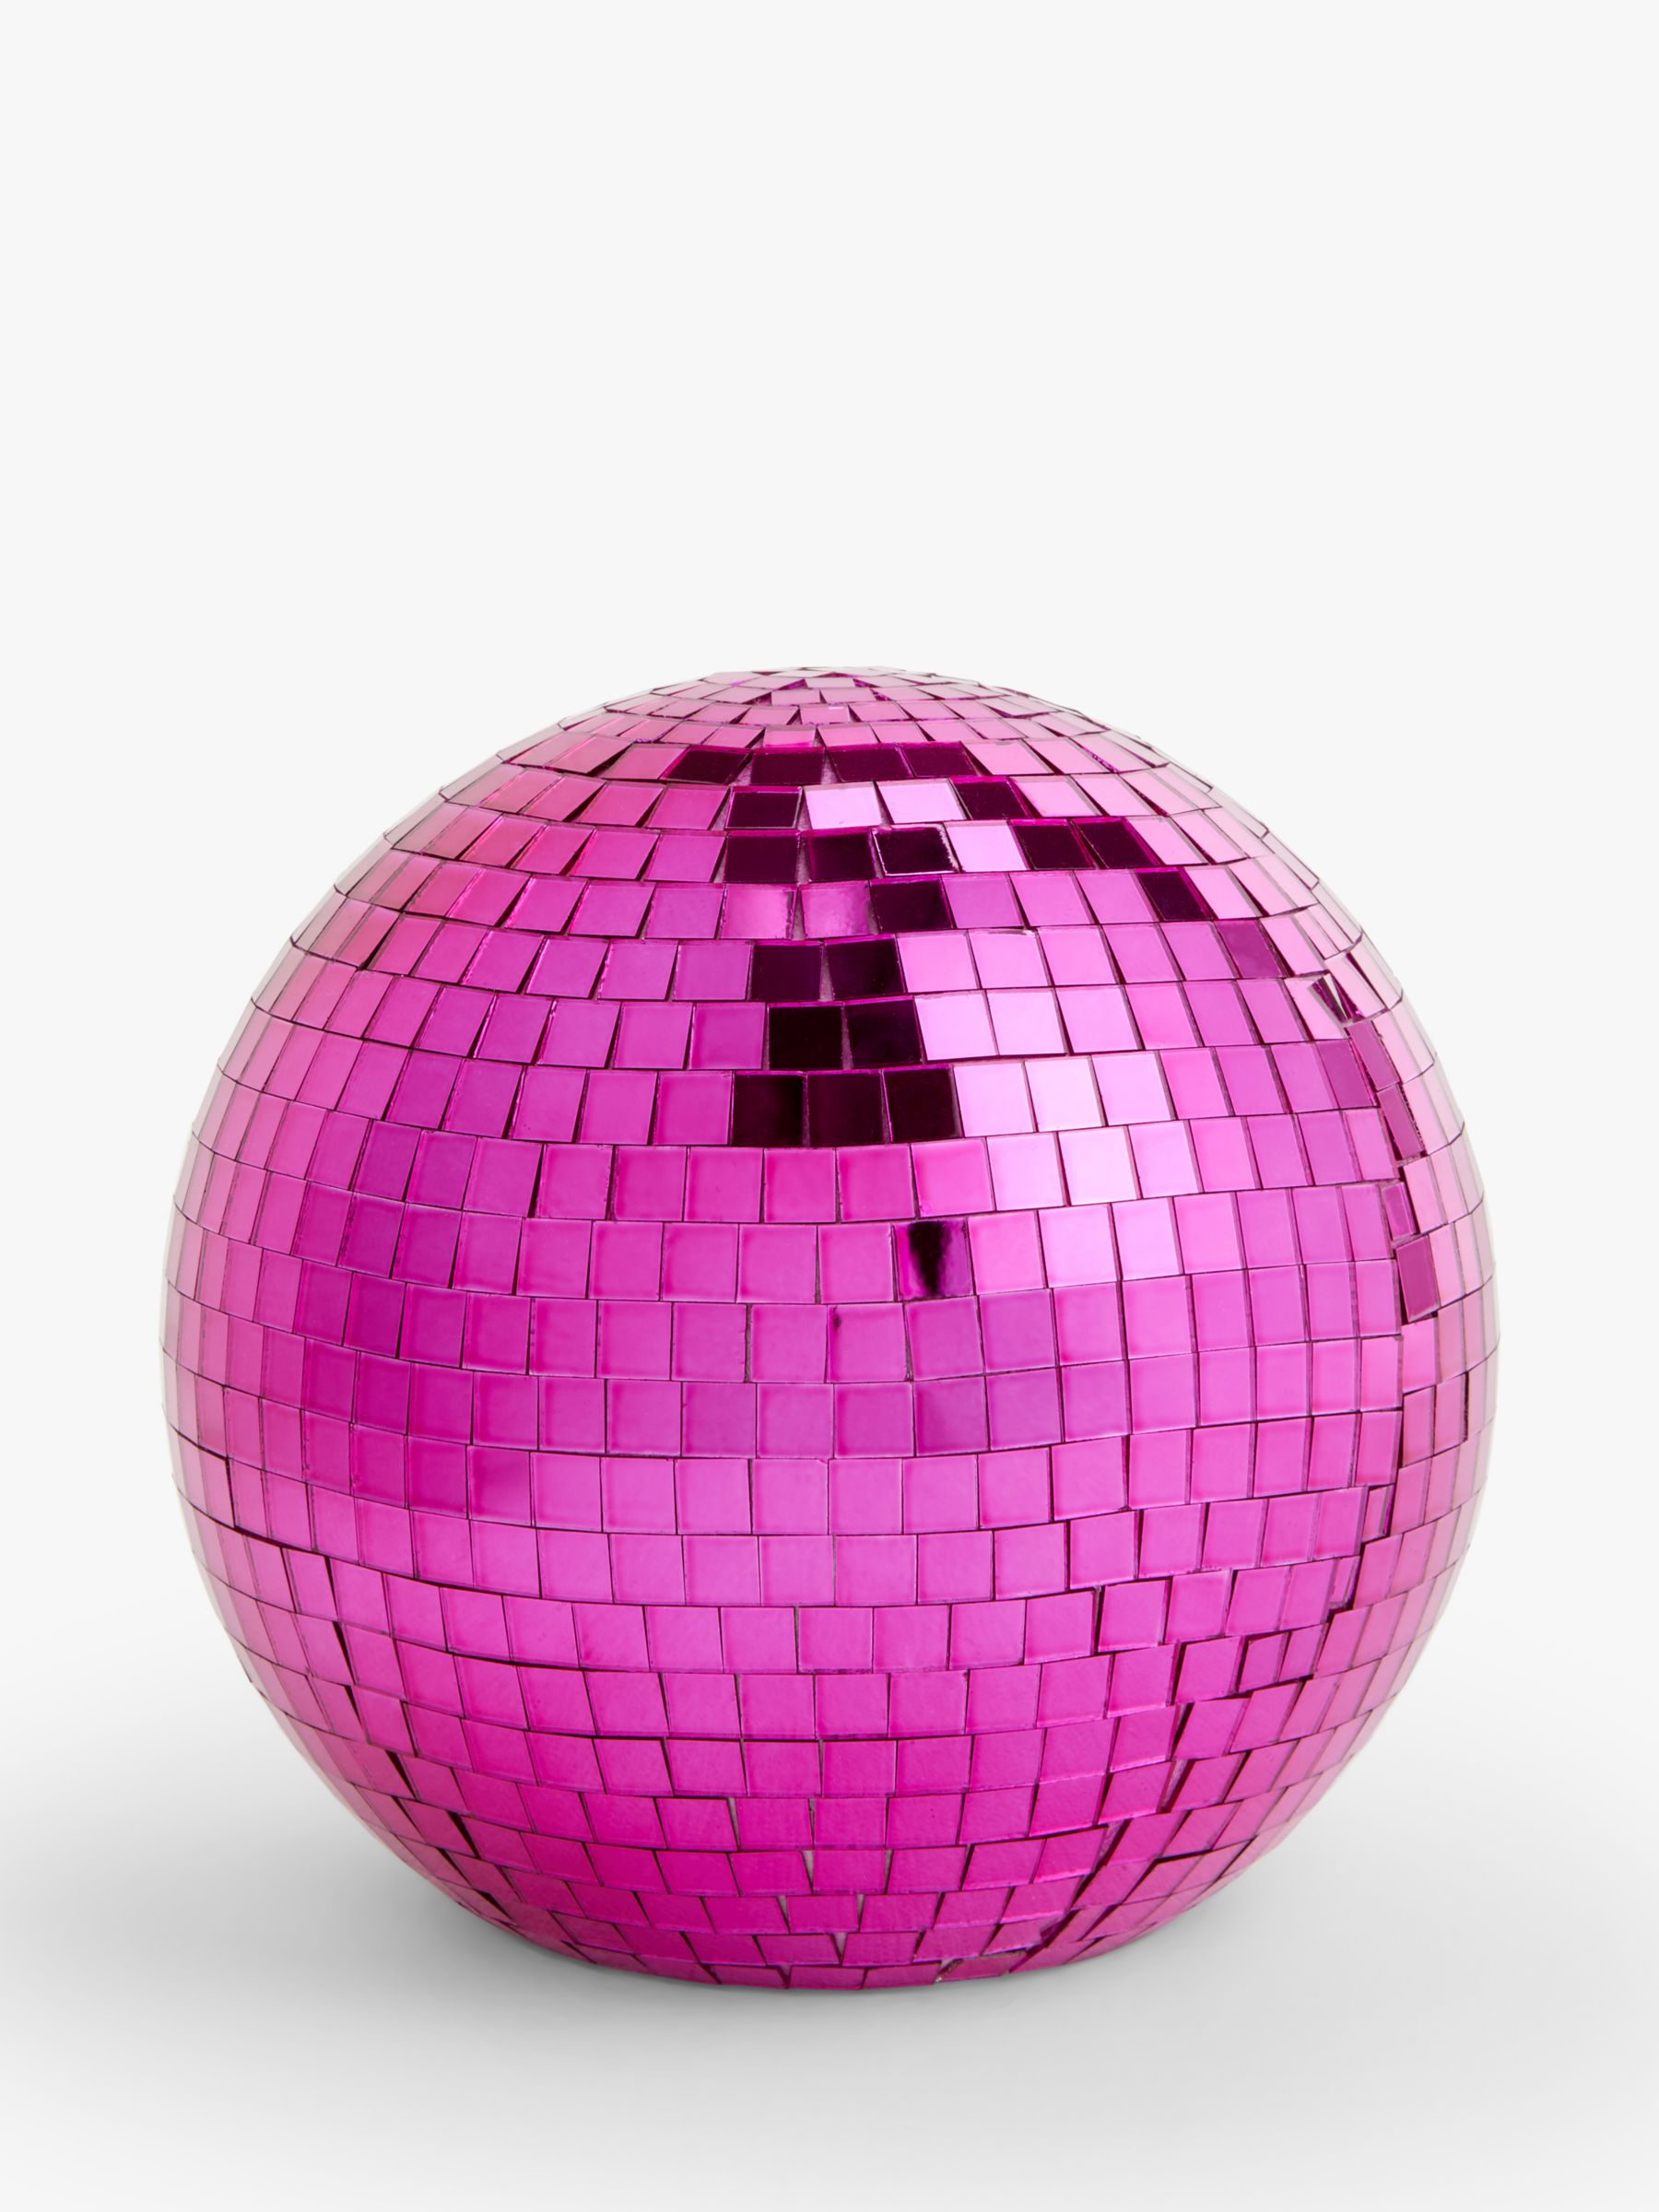 Pink Disco Ball | Poster